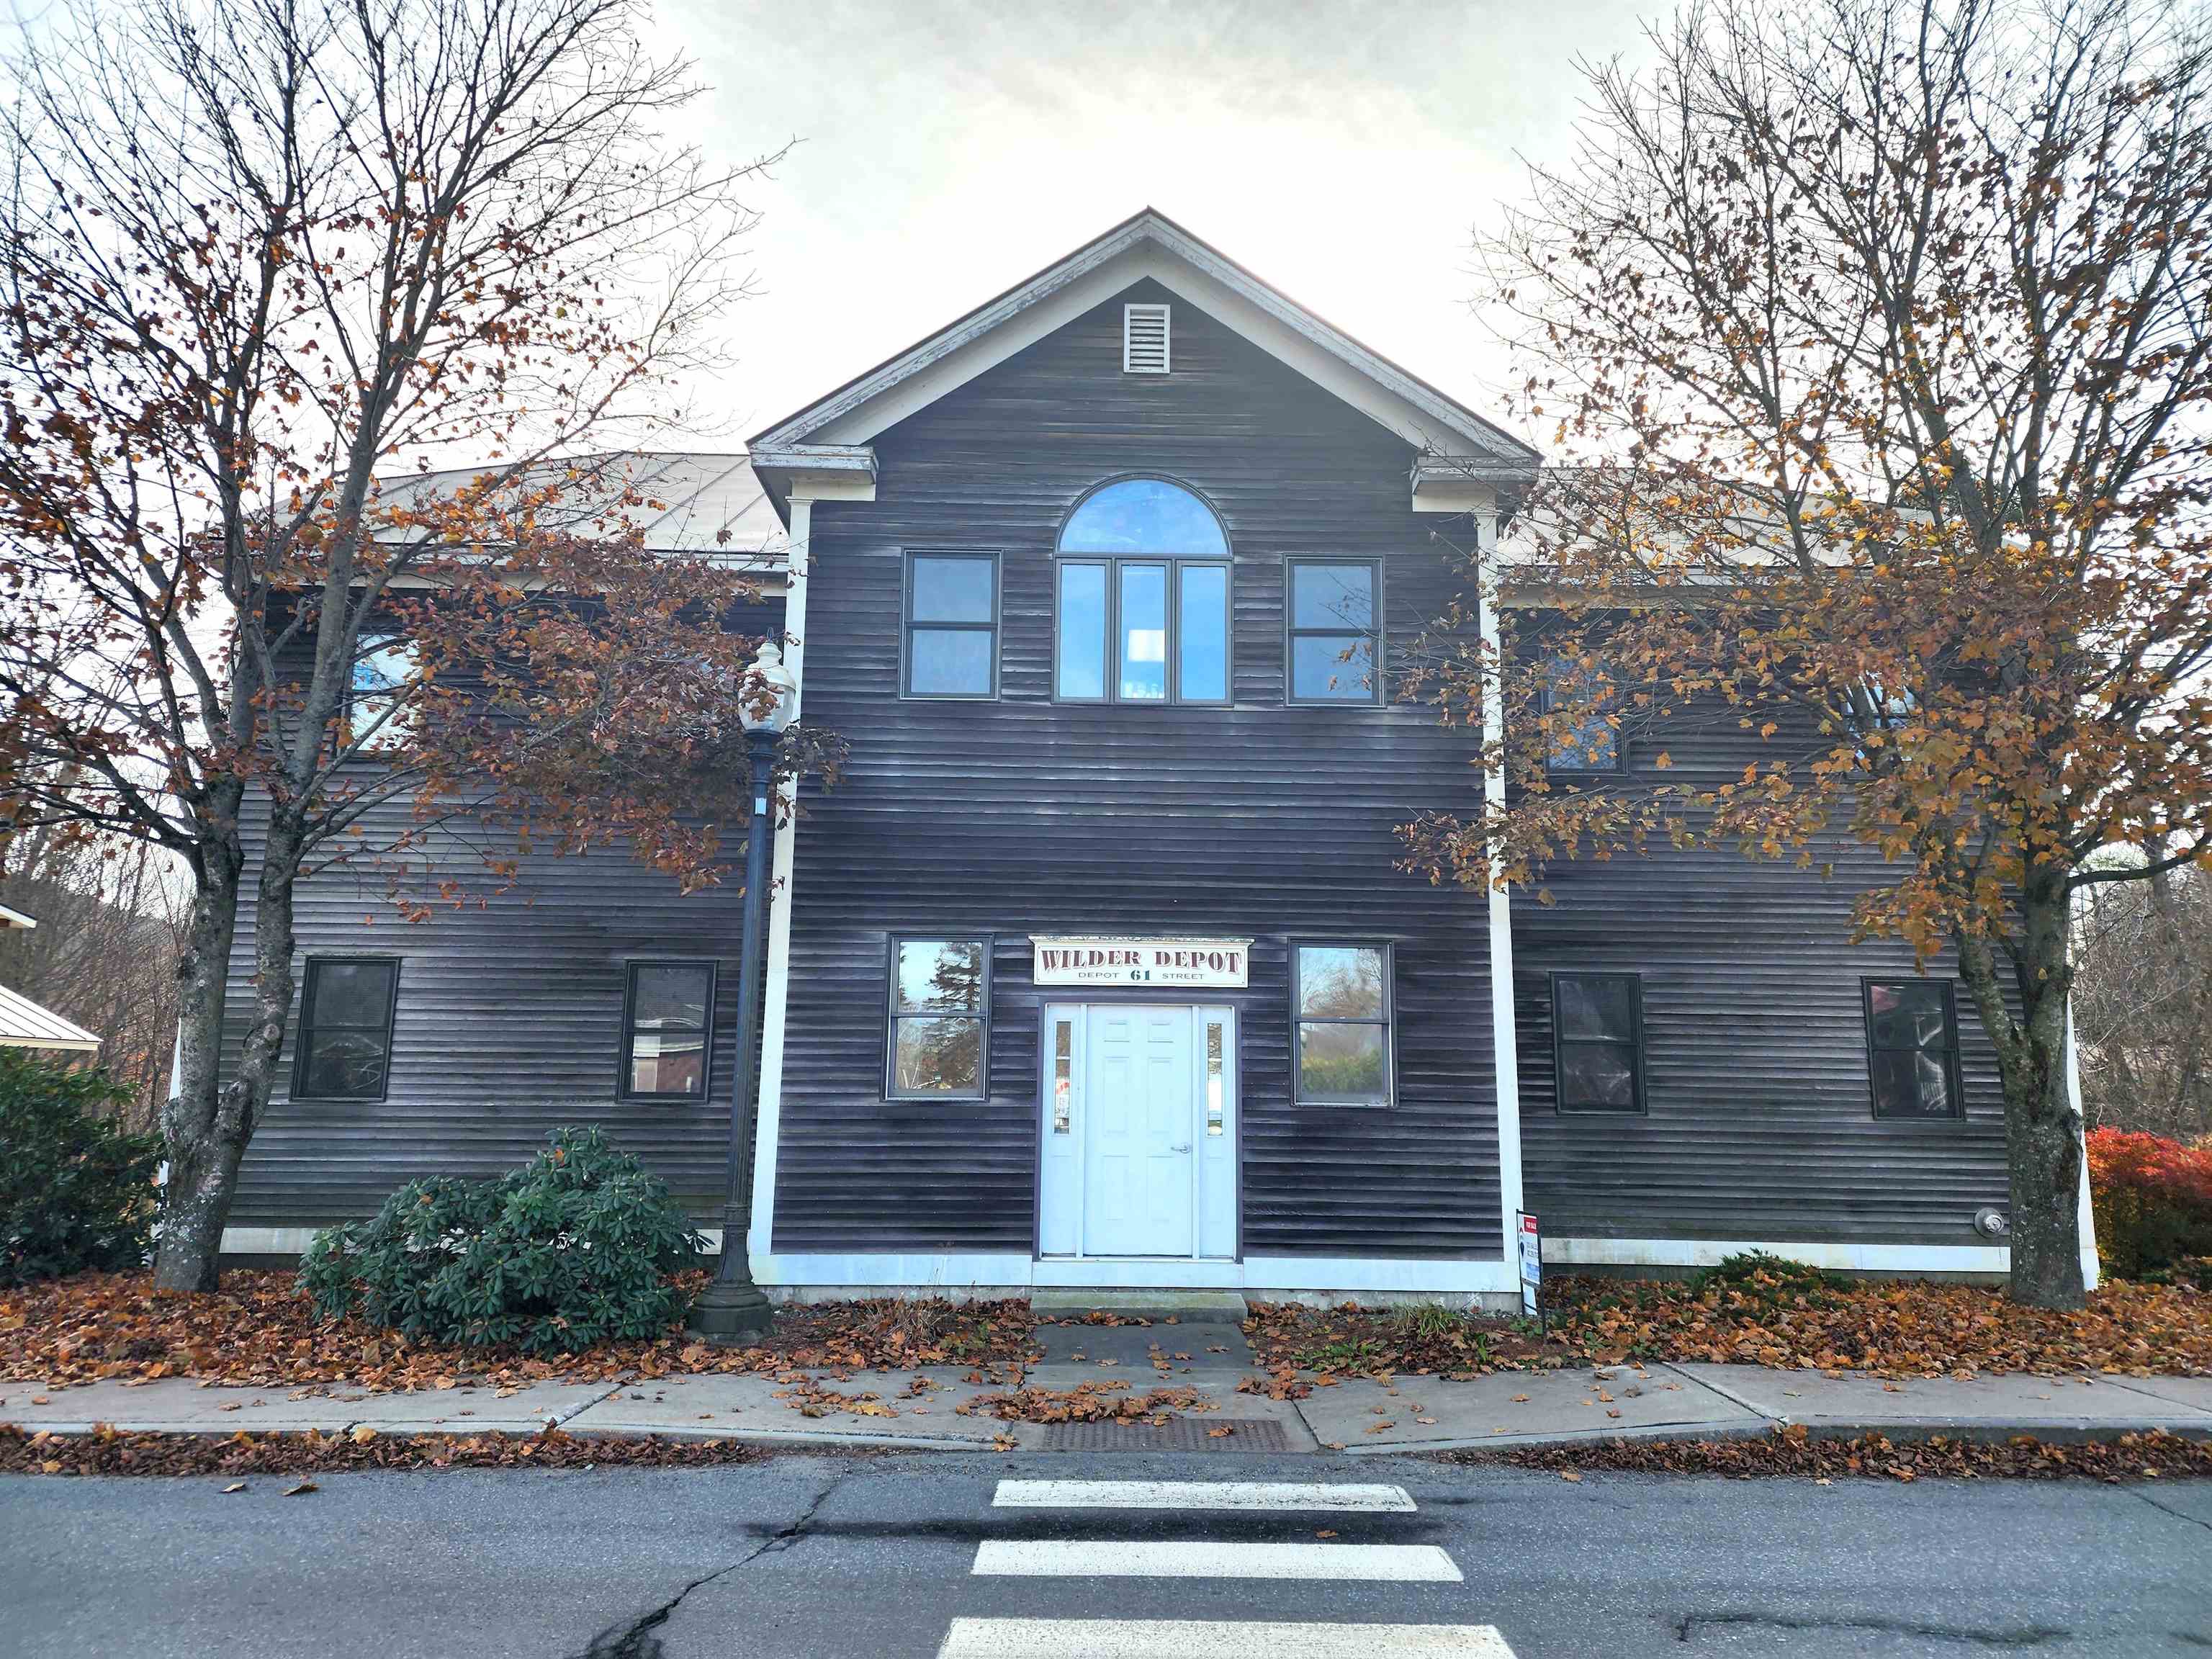 Village of Wilder in Town of Hartford VT Multi Family for sale $800,000 $115 per sq.ft.